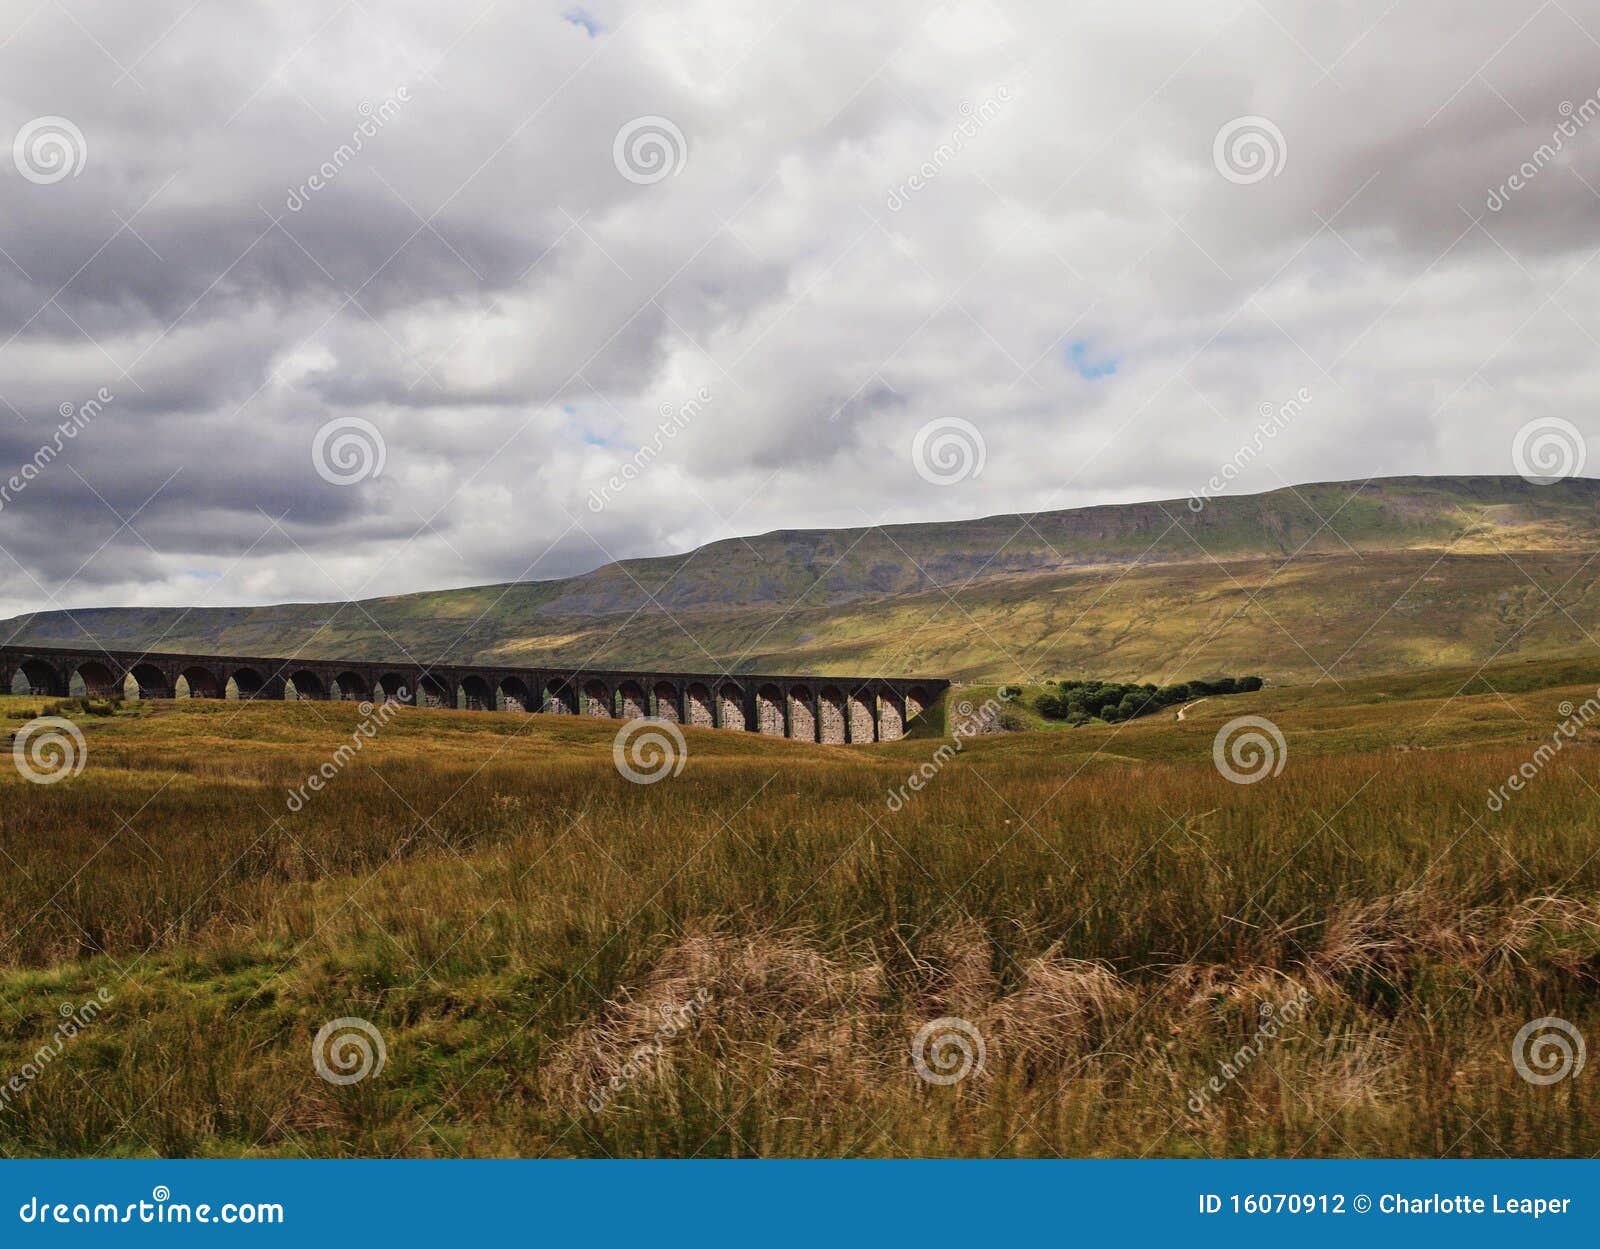 yorkshire dales & aqueduct